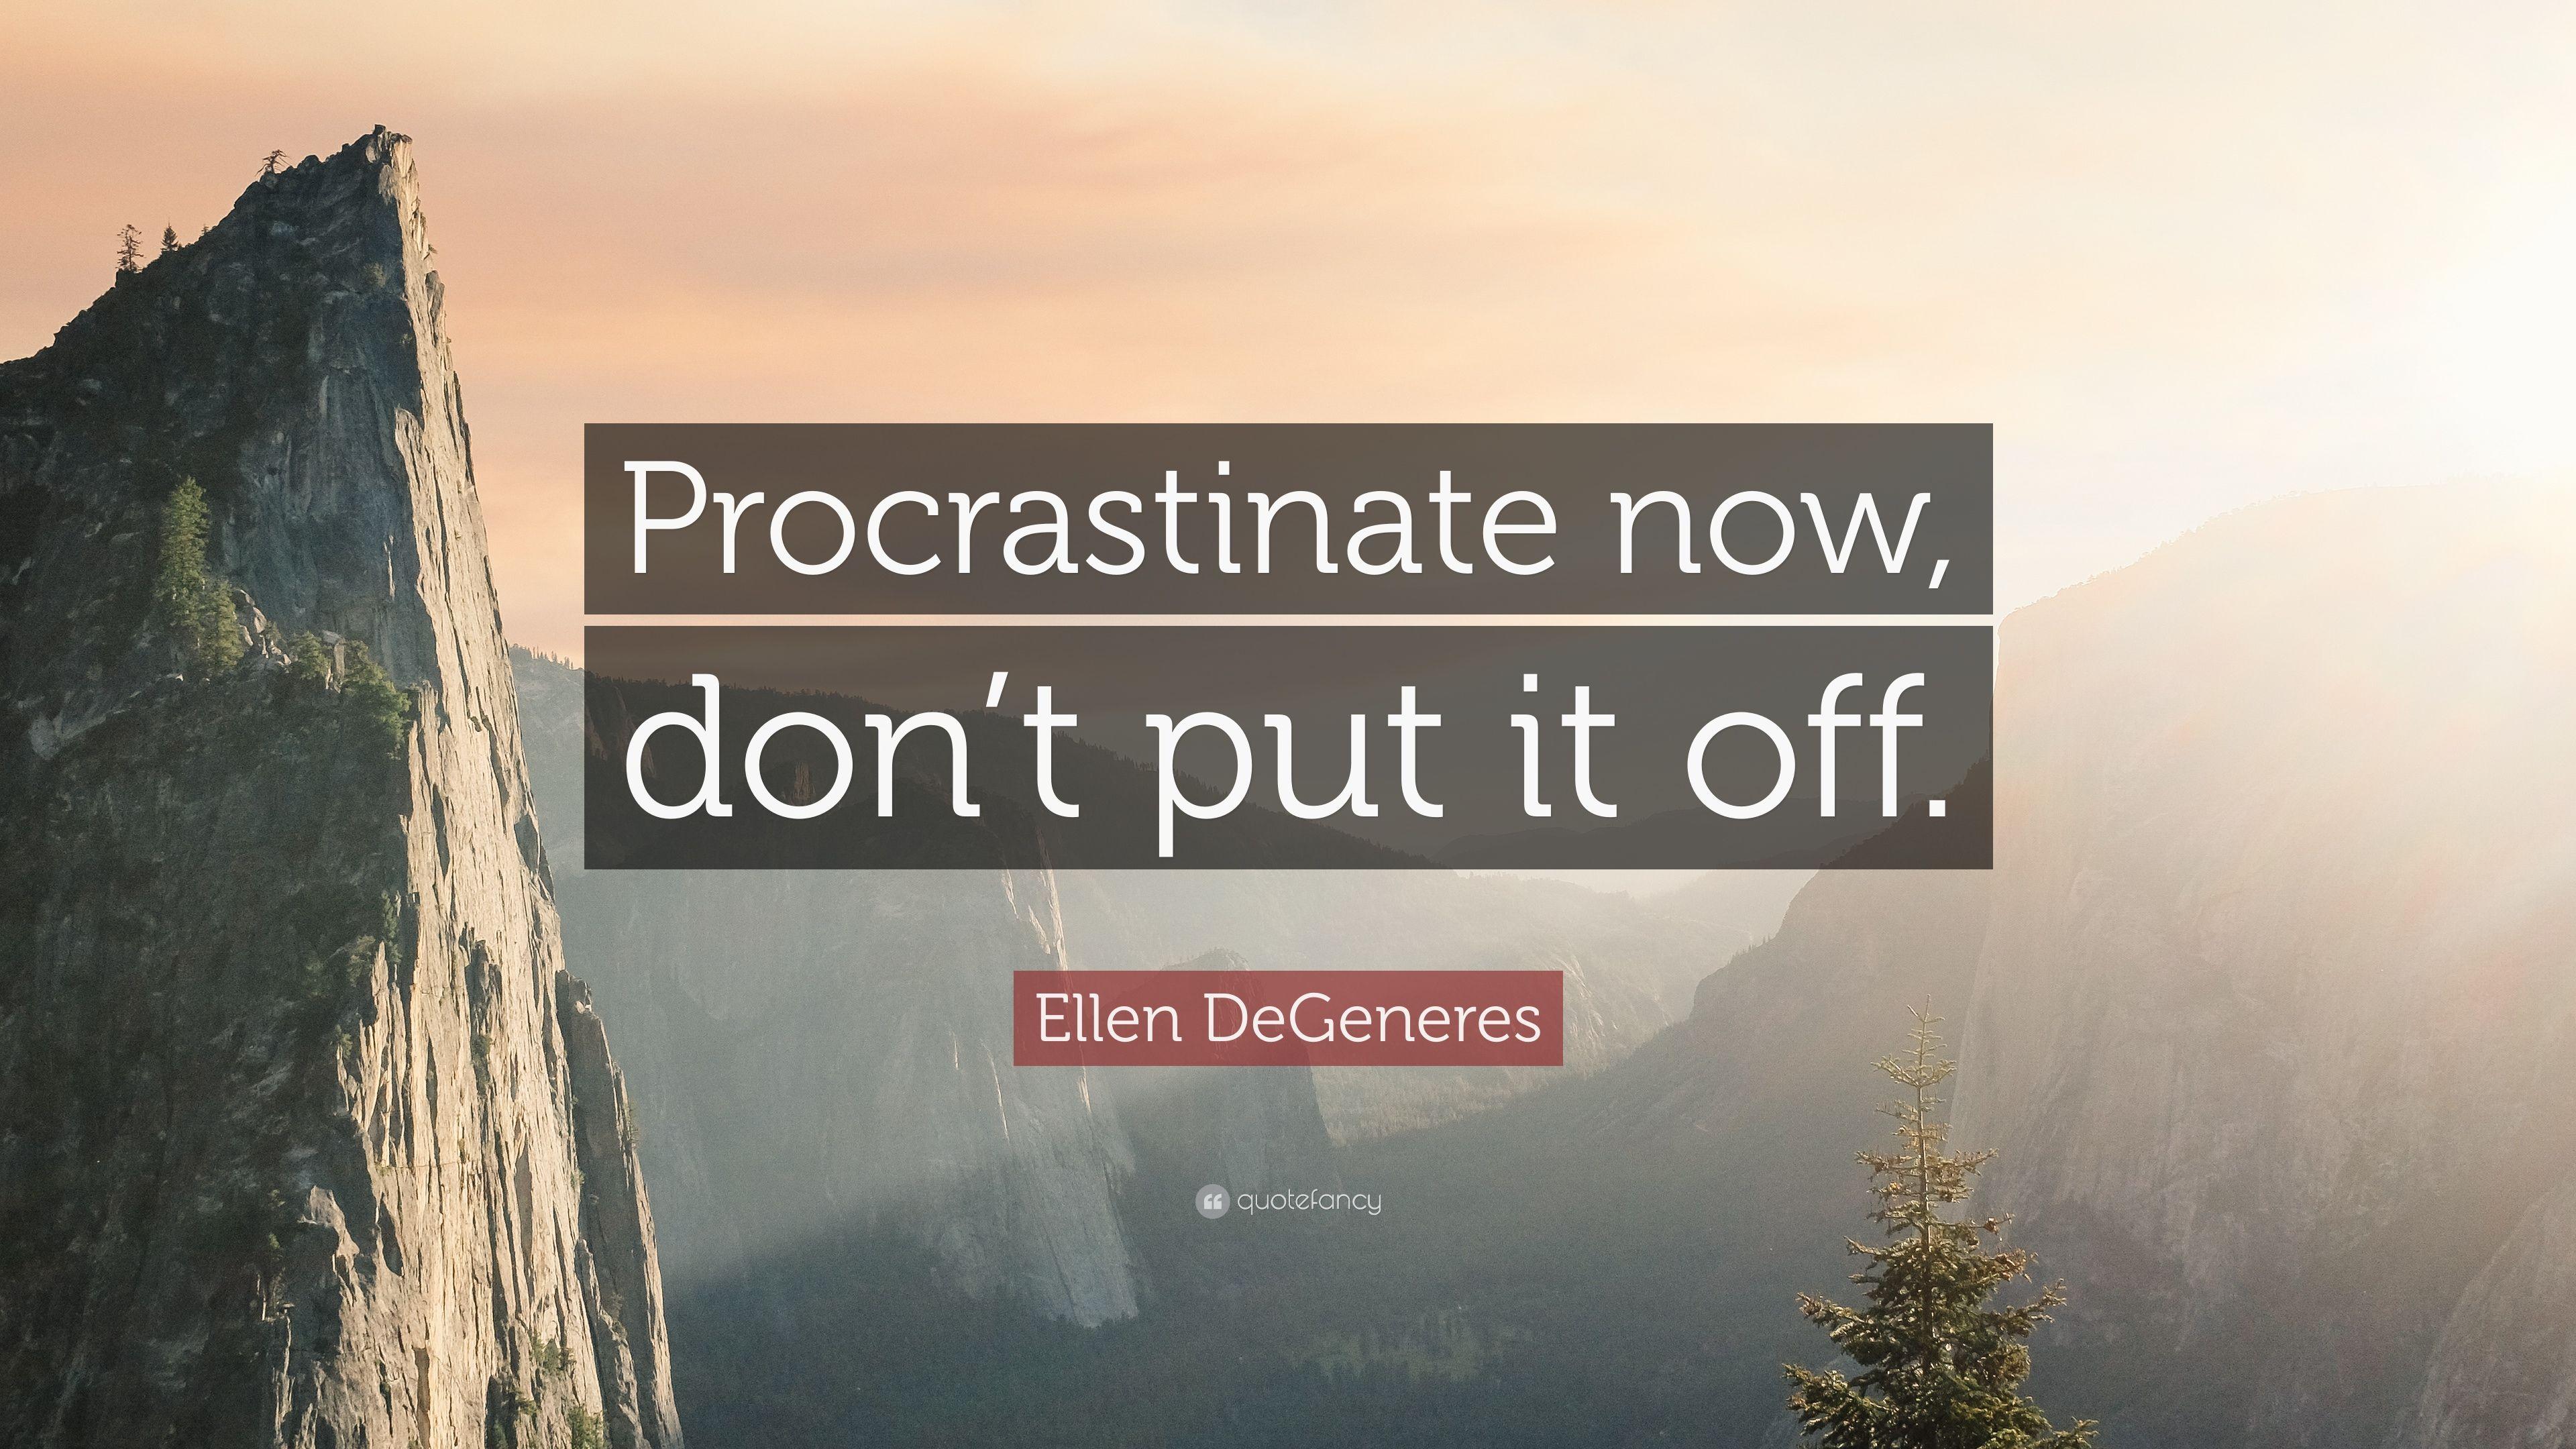 Ellen DeGeneres Quote: “Procrastinate now, don't put it off.” 12